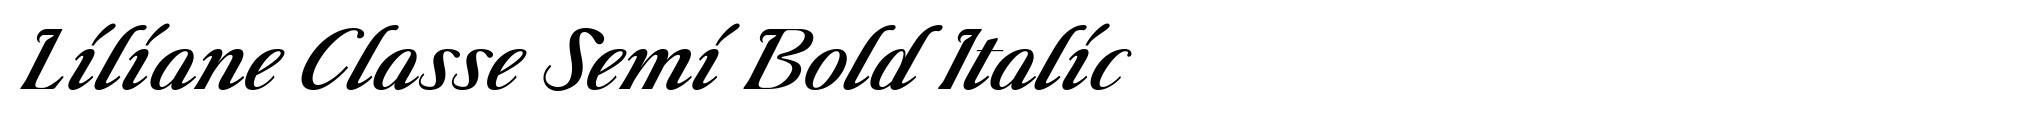 Liliane Classe Semi Bold Italic image